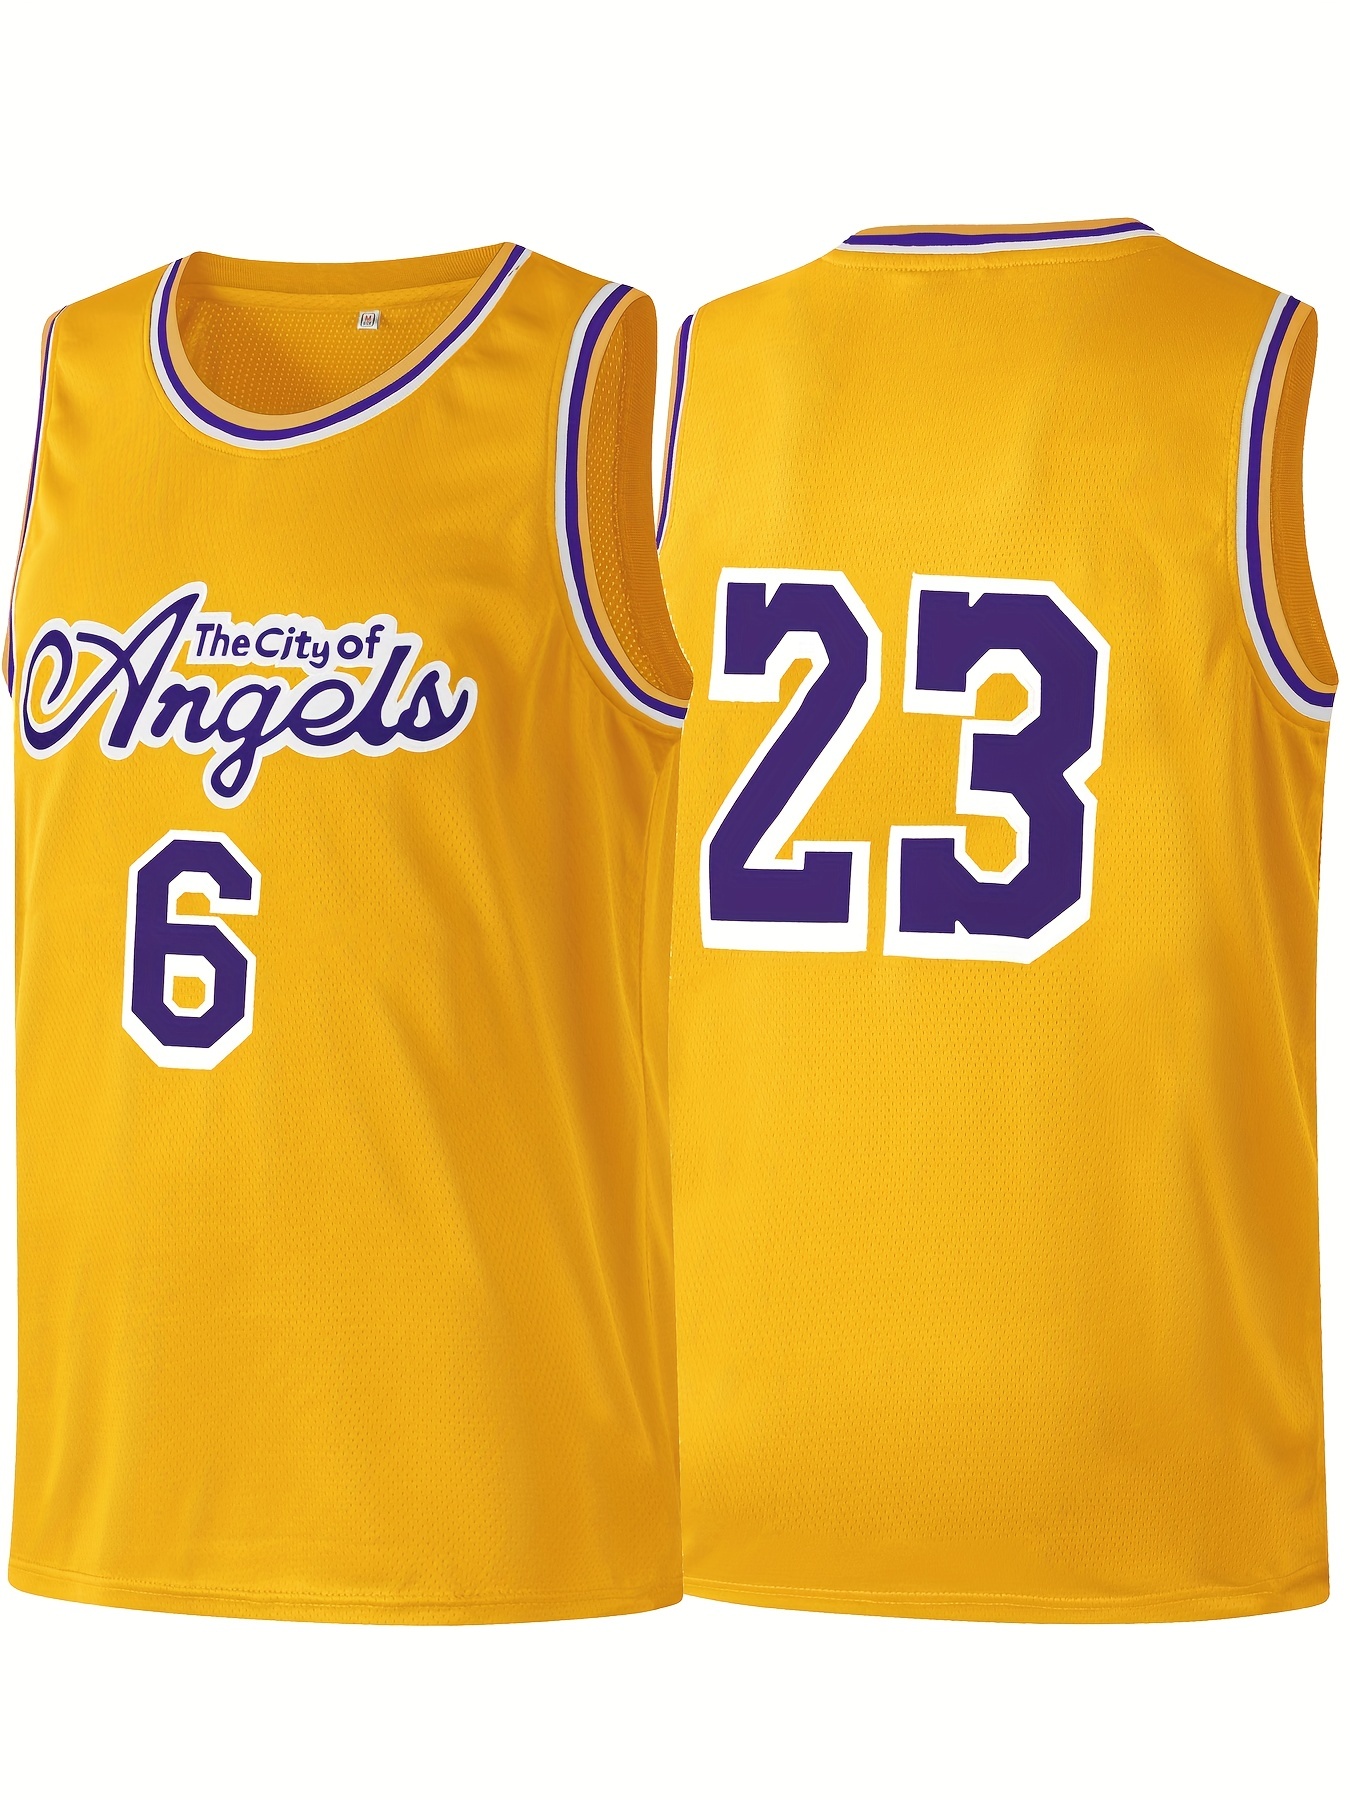 Kobe Lakers Jersey Sublimation Size M, Men's Fashion, Activewear